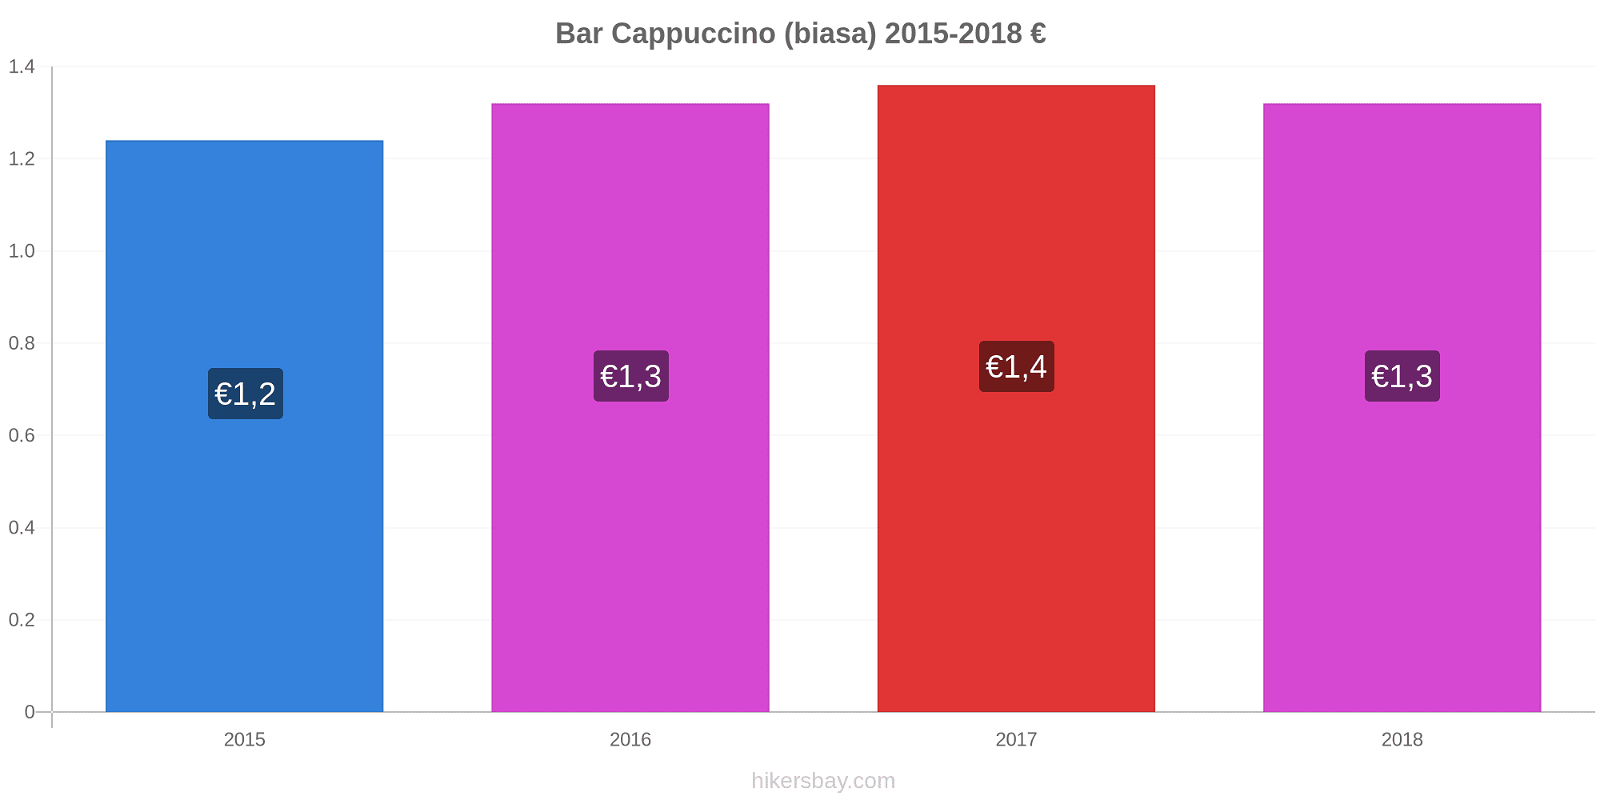 Bar perubahan harga Cappuccino (biasa) hikersbay.com